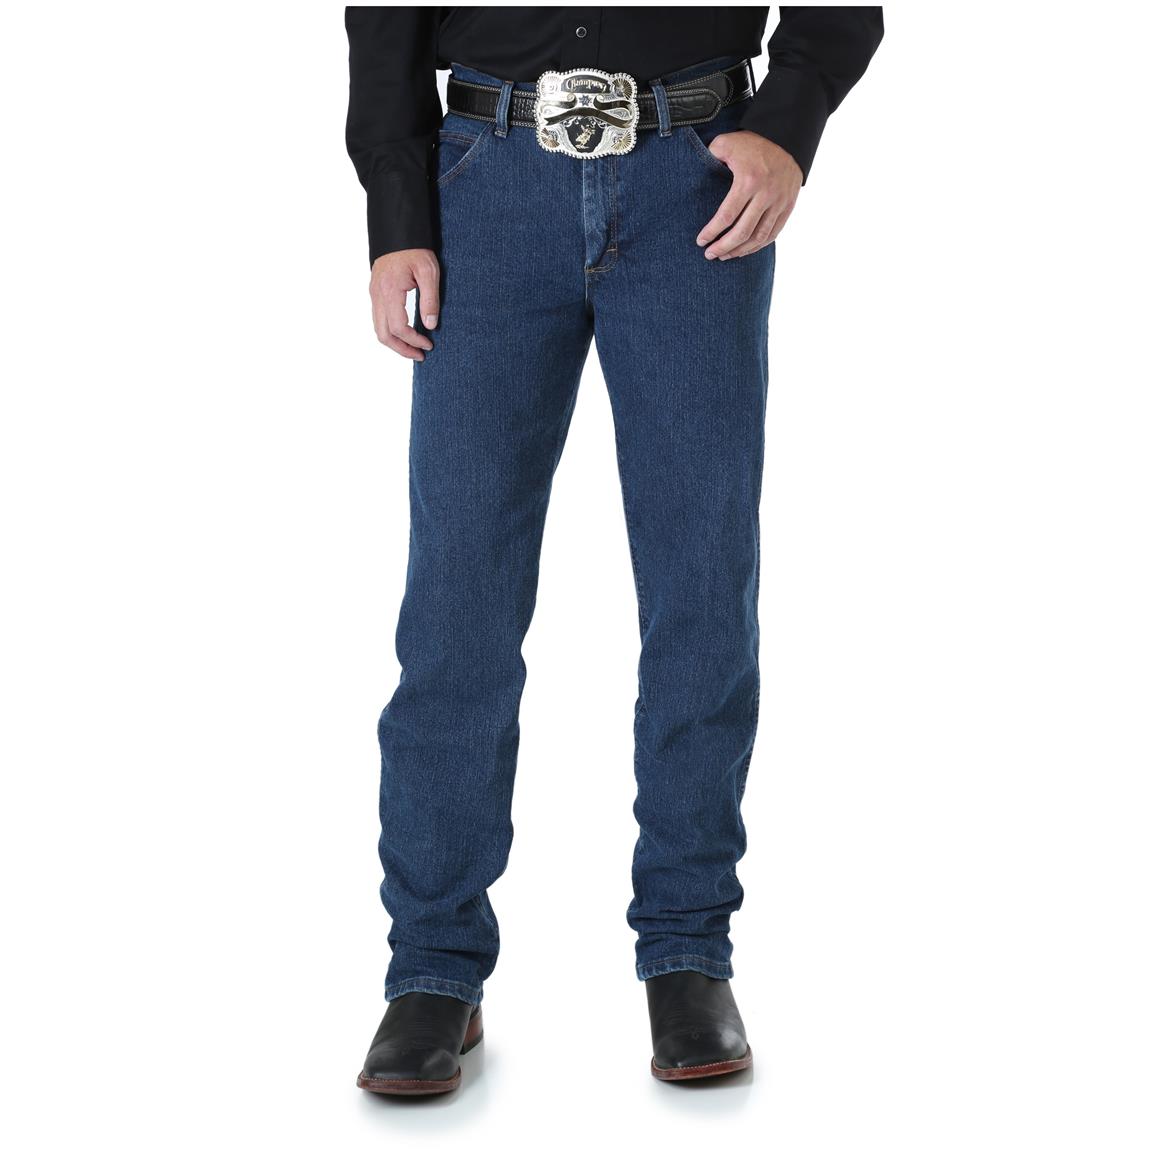 Wrangler Premium Performance Advanced Comfort Cowboy Cut Regular Fit Jeans, Mid Stone